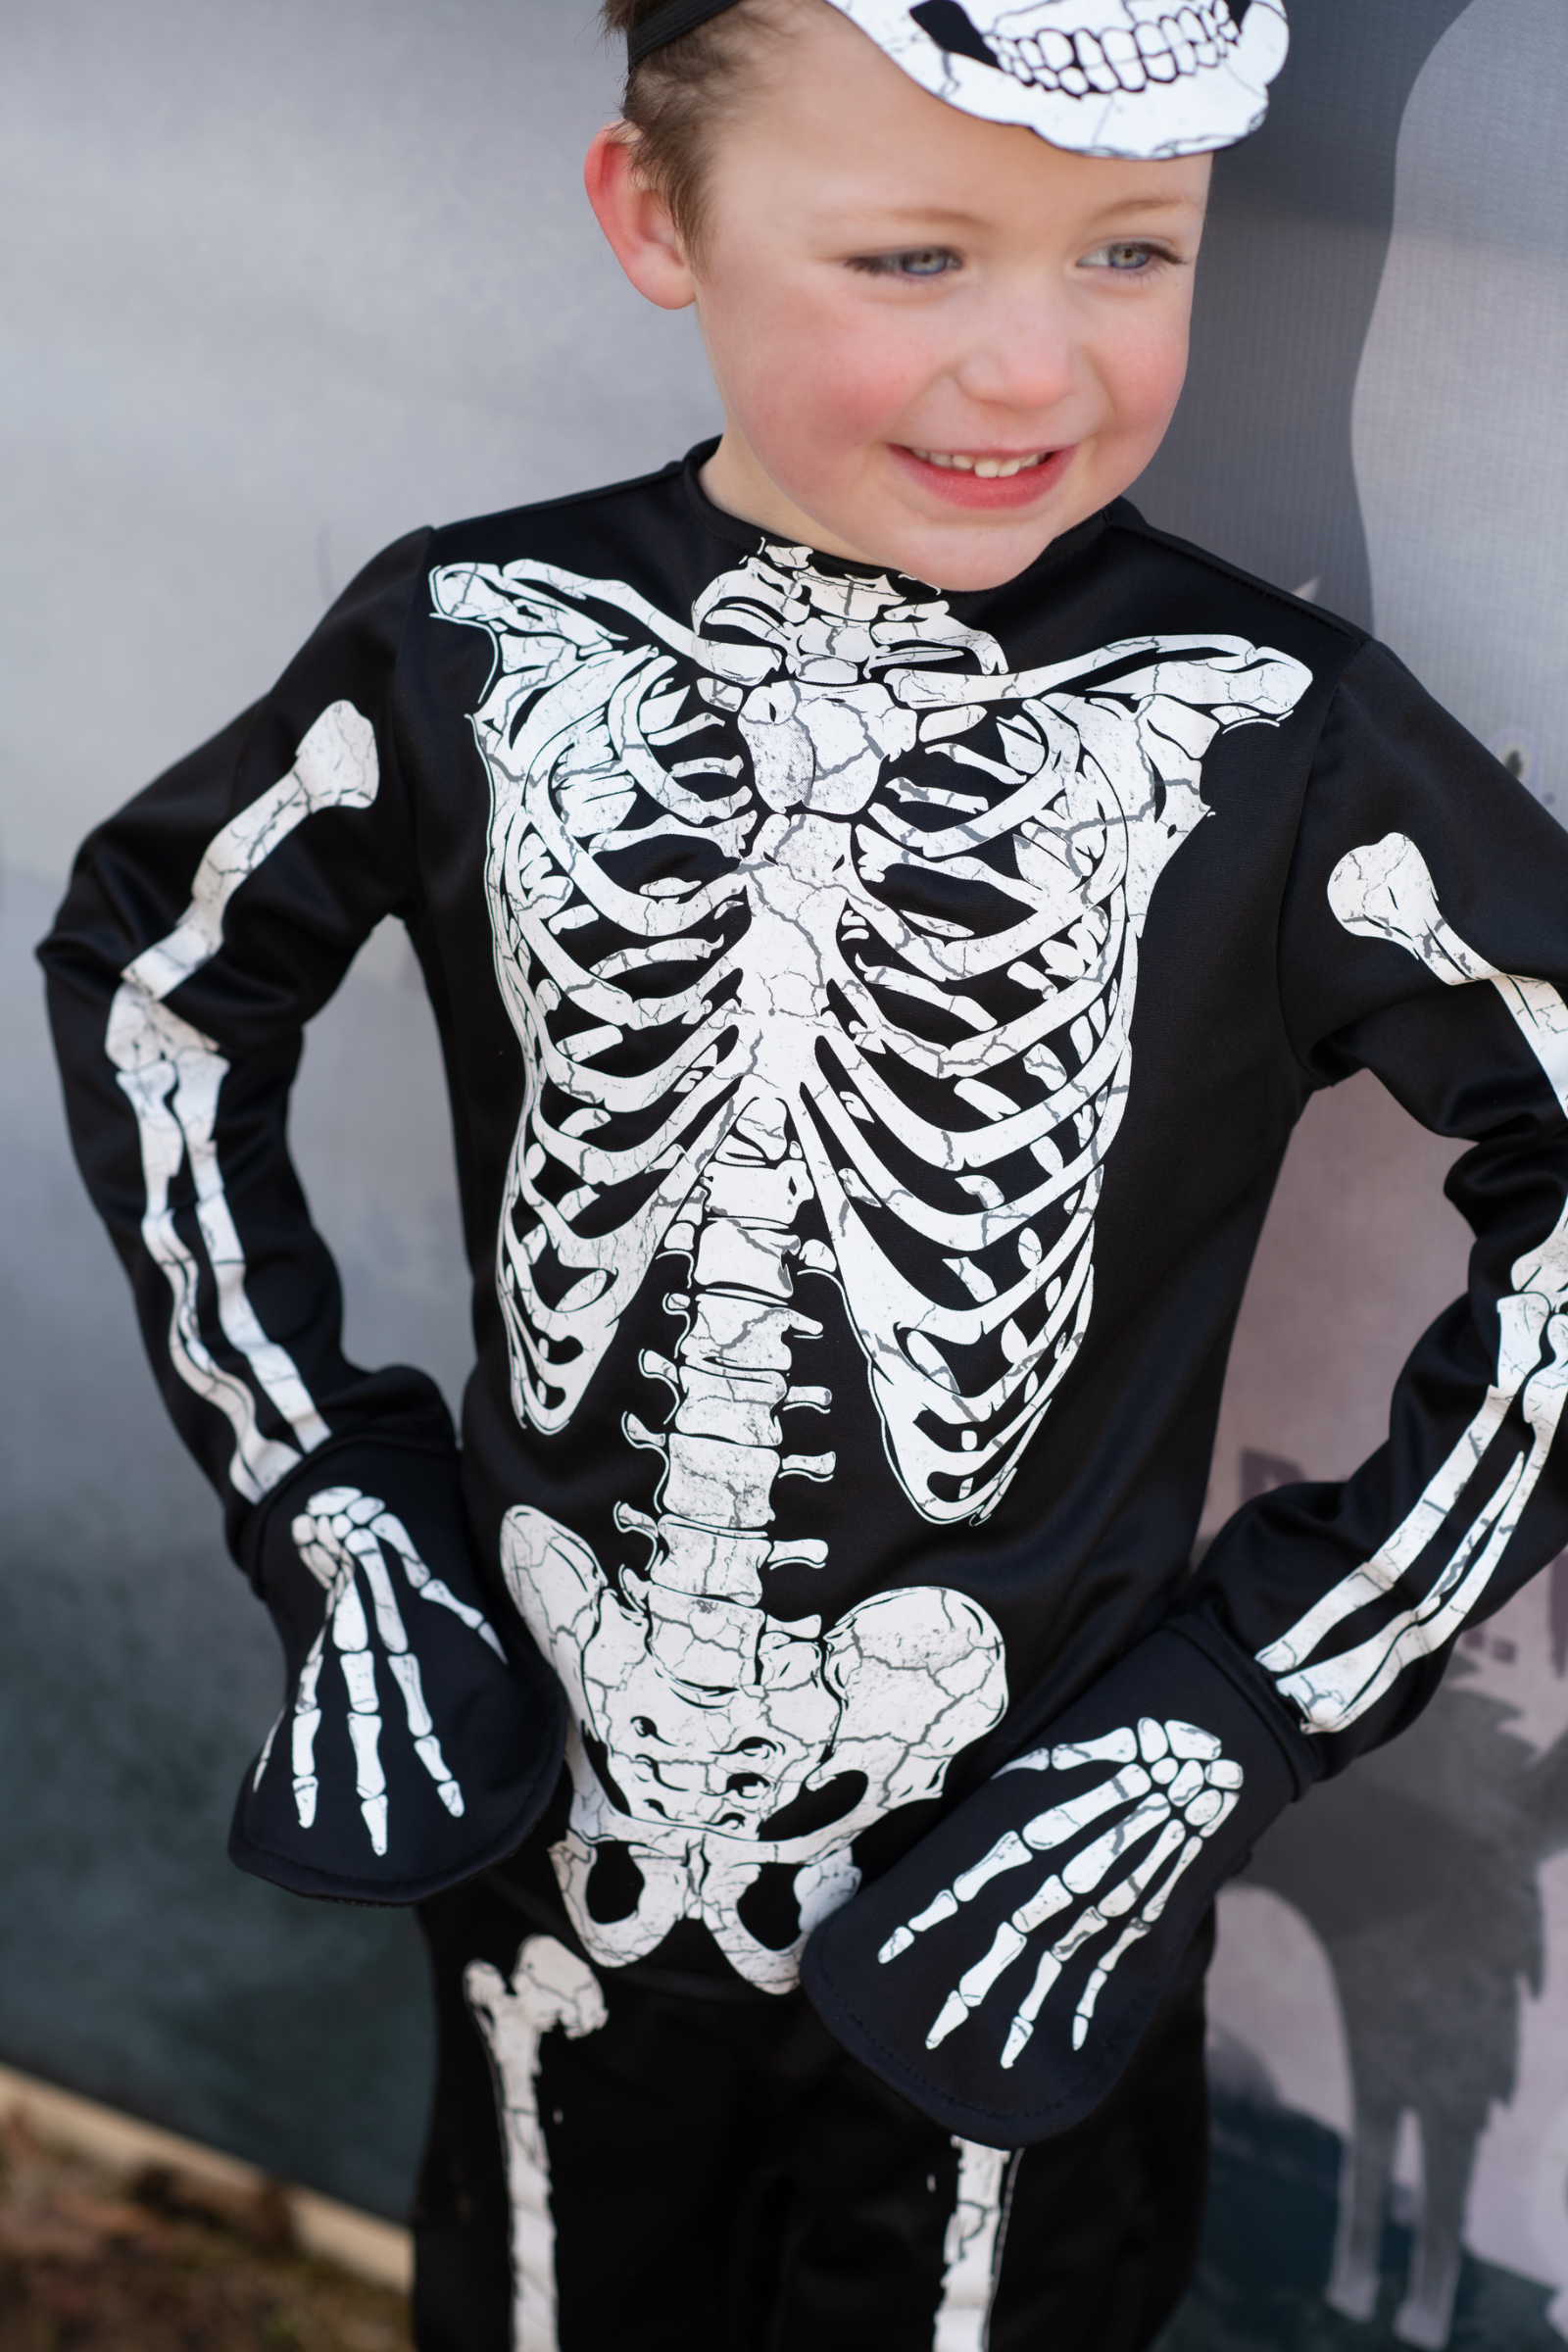 Glow in the Dark Skeleton Shirts, Pants & Mask Set - Suite Child